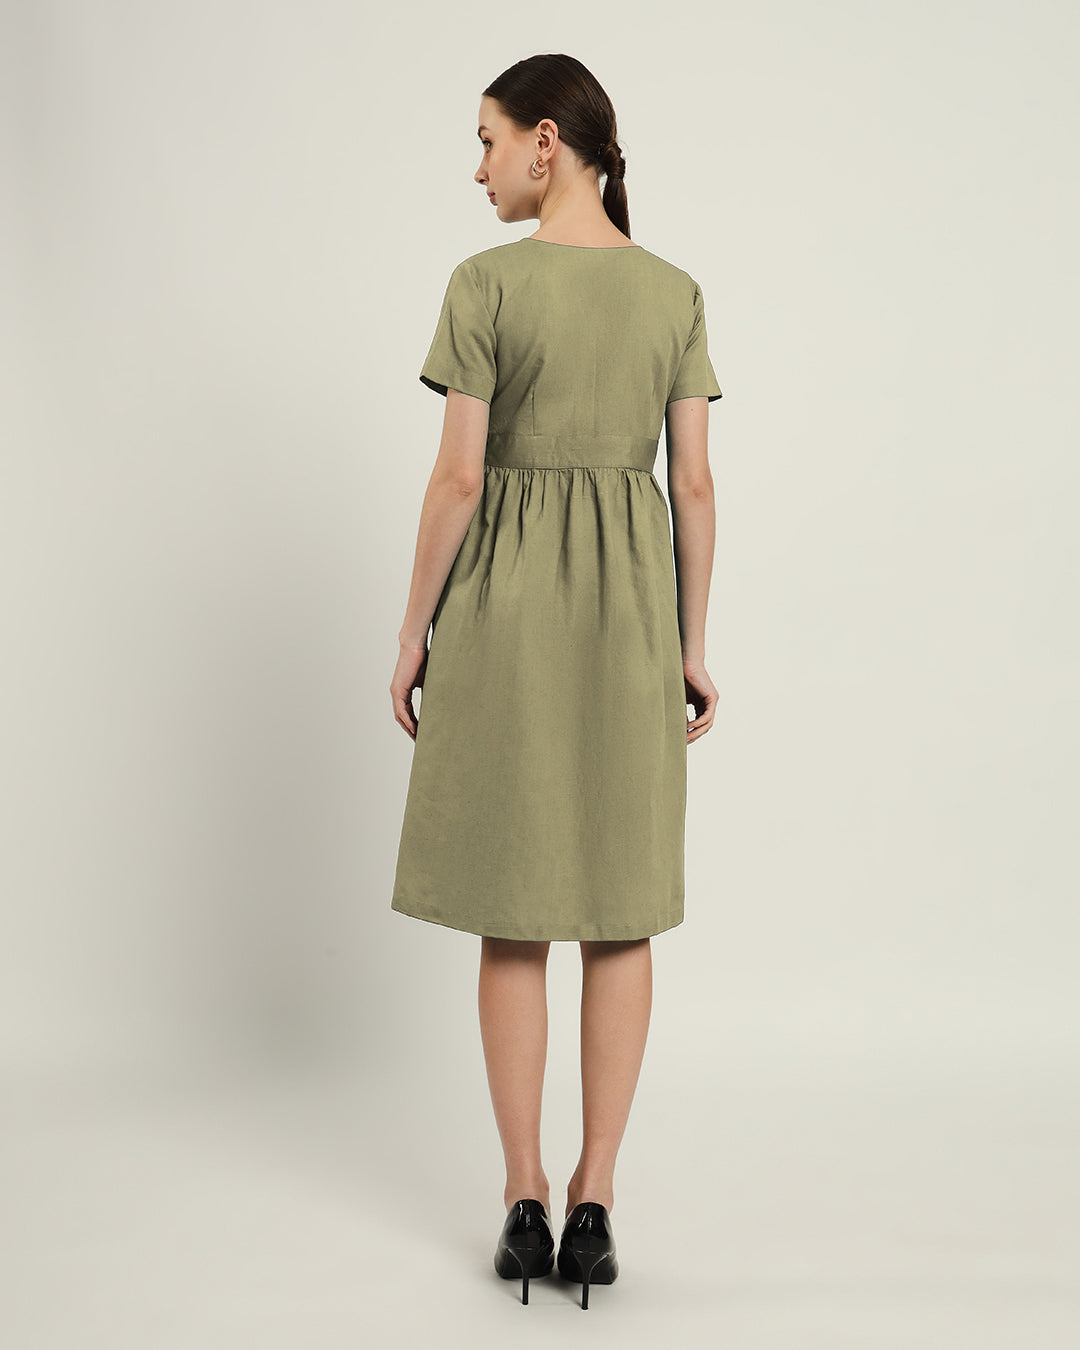 The Miyoshi Daisy Olive Linen Dress